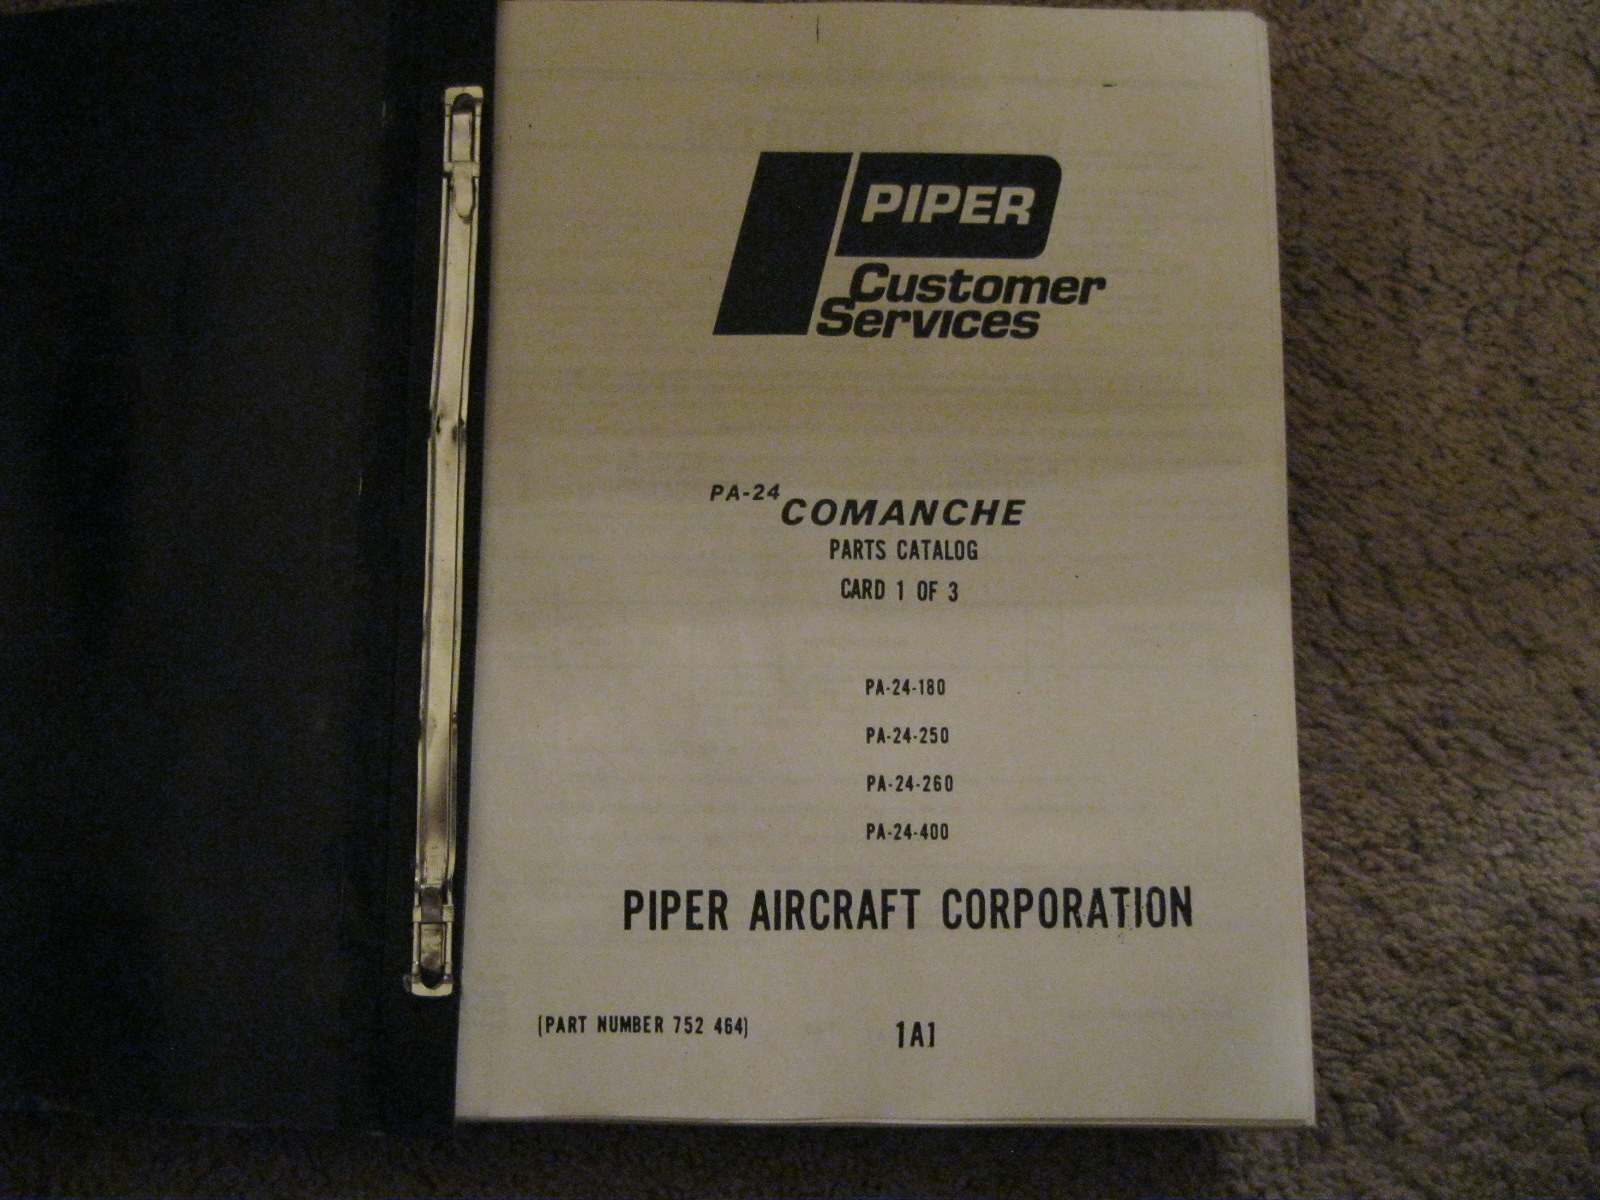 PA-24 Comanche Parts Catalog PRINTED